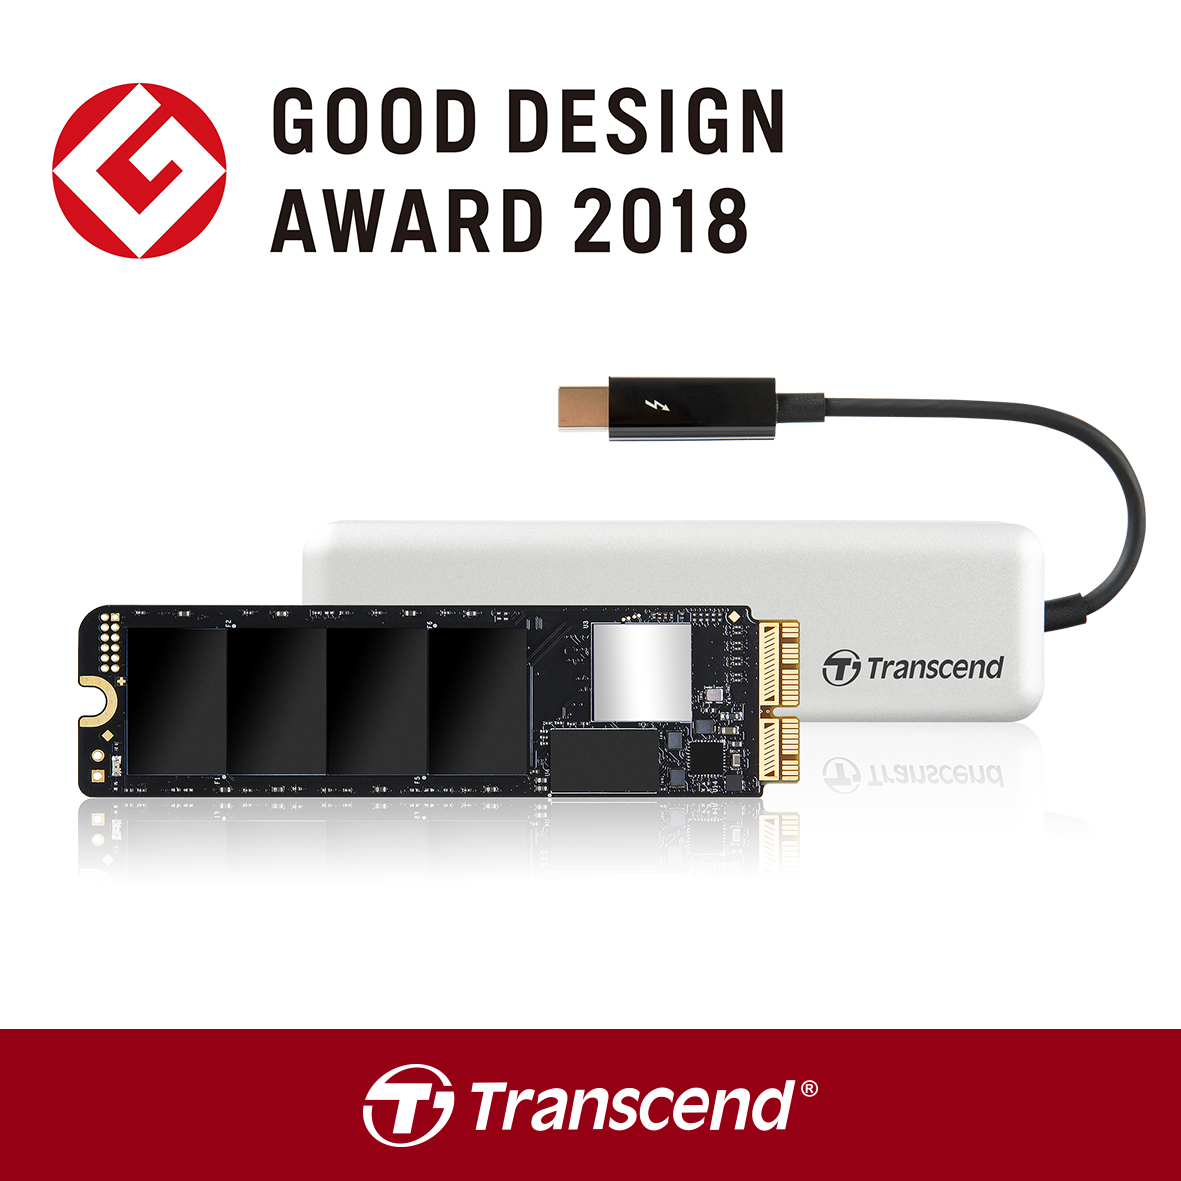 transcend good design 2018 jetdrive 855 ทรานส์เซนด์ คว้ารางวัล Good Design Award 2018 จากประเทศญี่ปุ่น